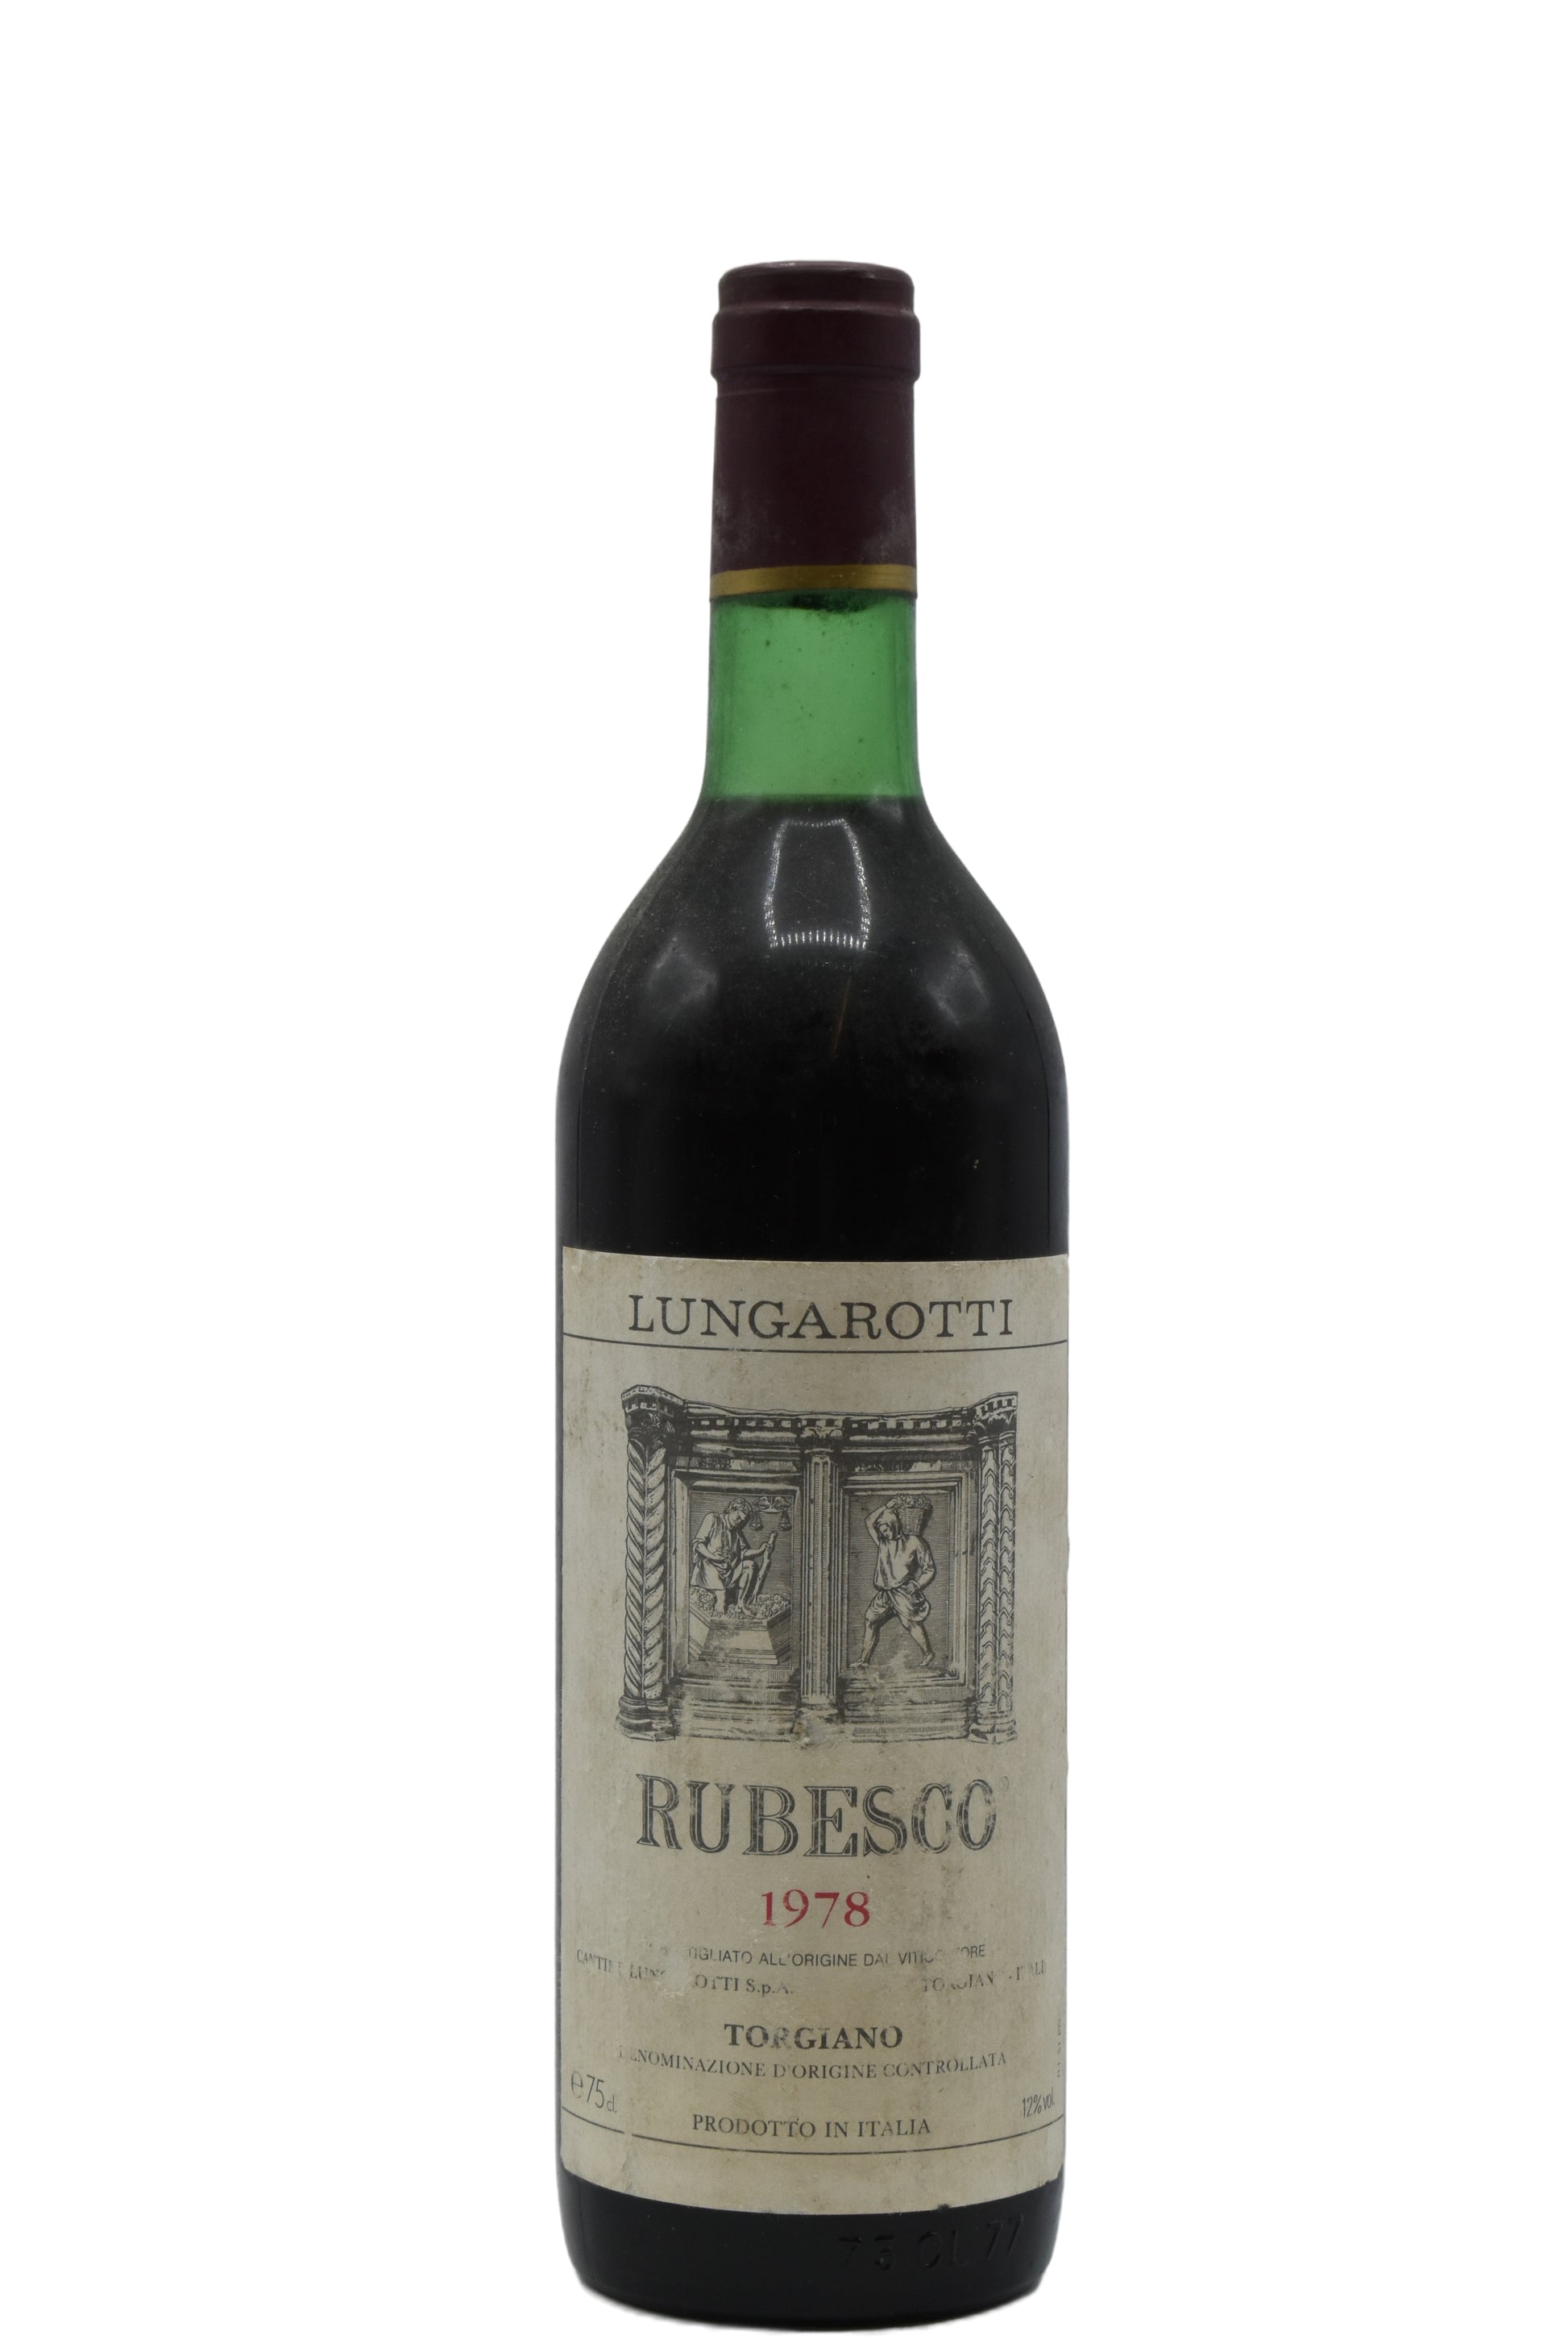 1978 Lungarotti, Rubesco, Torgiano 750ml - Walker Wine Co.